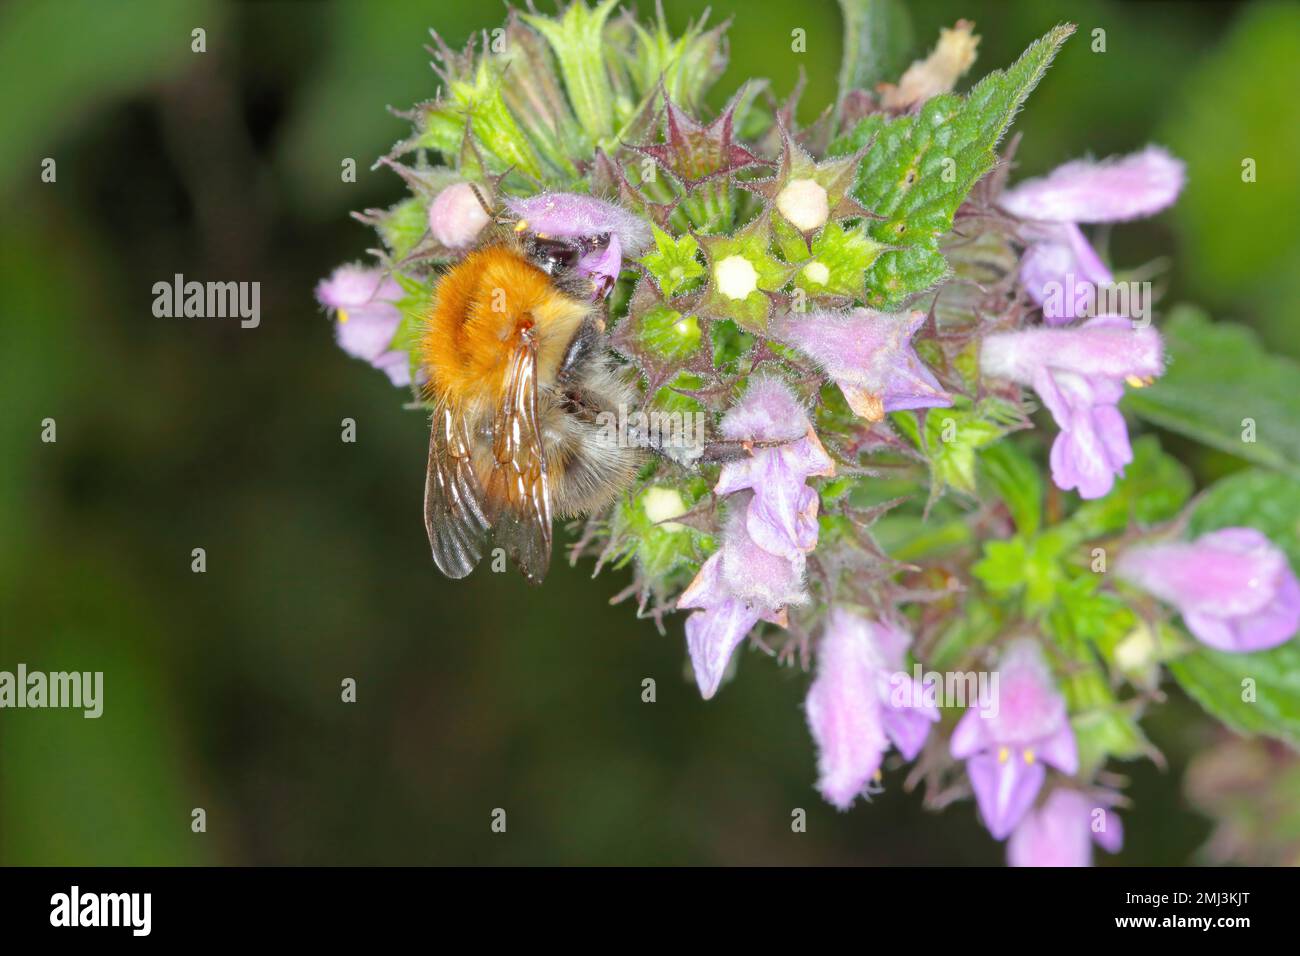 Bumblebee (Bombus sp.) pollinating flowers. Stock Photo